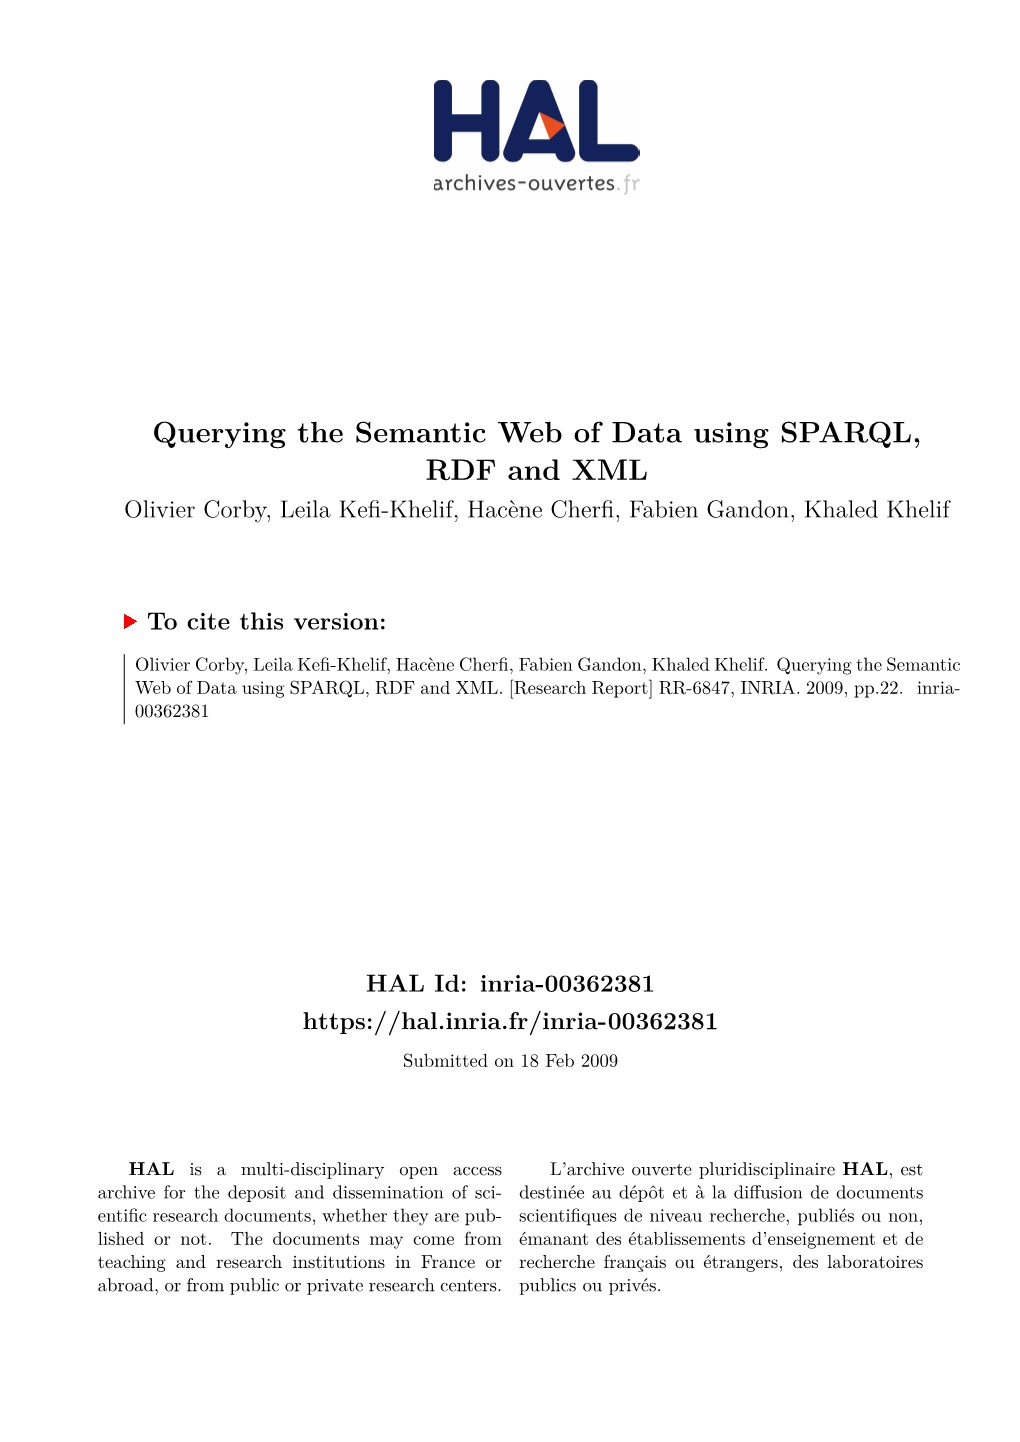 Querying the Semantic Web of Data Using SPARQL, RDF and XML Olivier Corby, Leila Kefi-Khelif, Hacène Cherfi, Fabien Gandon, Khaled Khelif